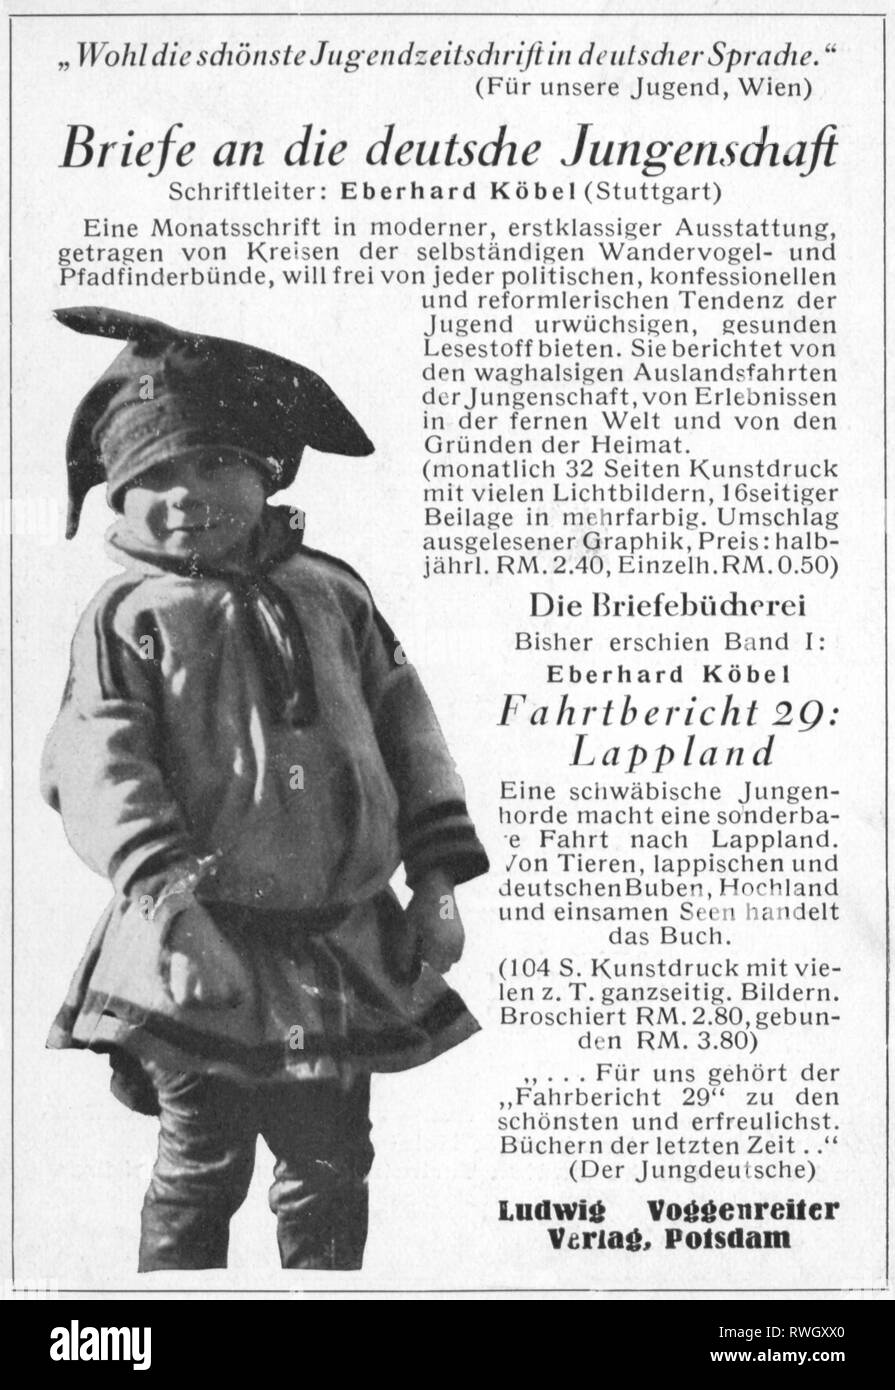 Koebel, Eberhard, 22.6.1907 - 31.8.1955, autore tedesco / scrittore, la pubblicità per la sua rivista "Briefe an die deutsche Jungenschaft' (lettere alla Deutsche Jungenschaft), 1928 - 1933, Additional-Rights-Clearance-Info-Not-Available Foto Stock